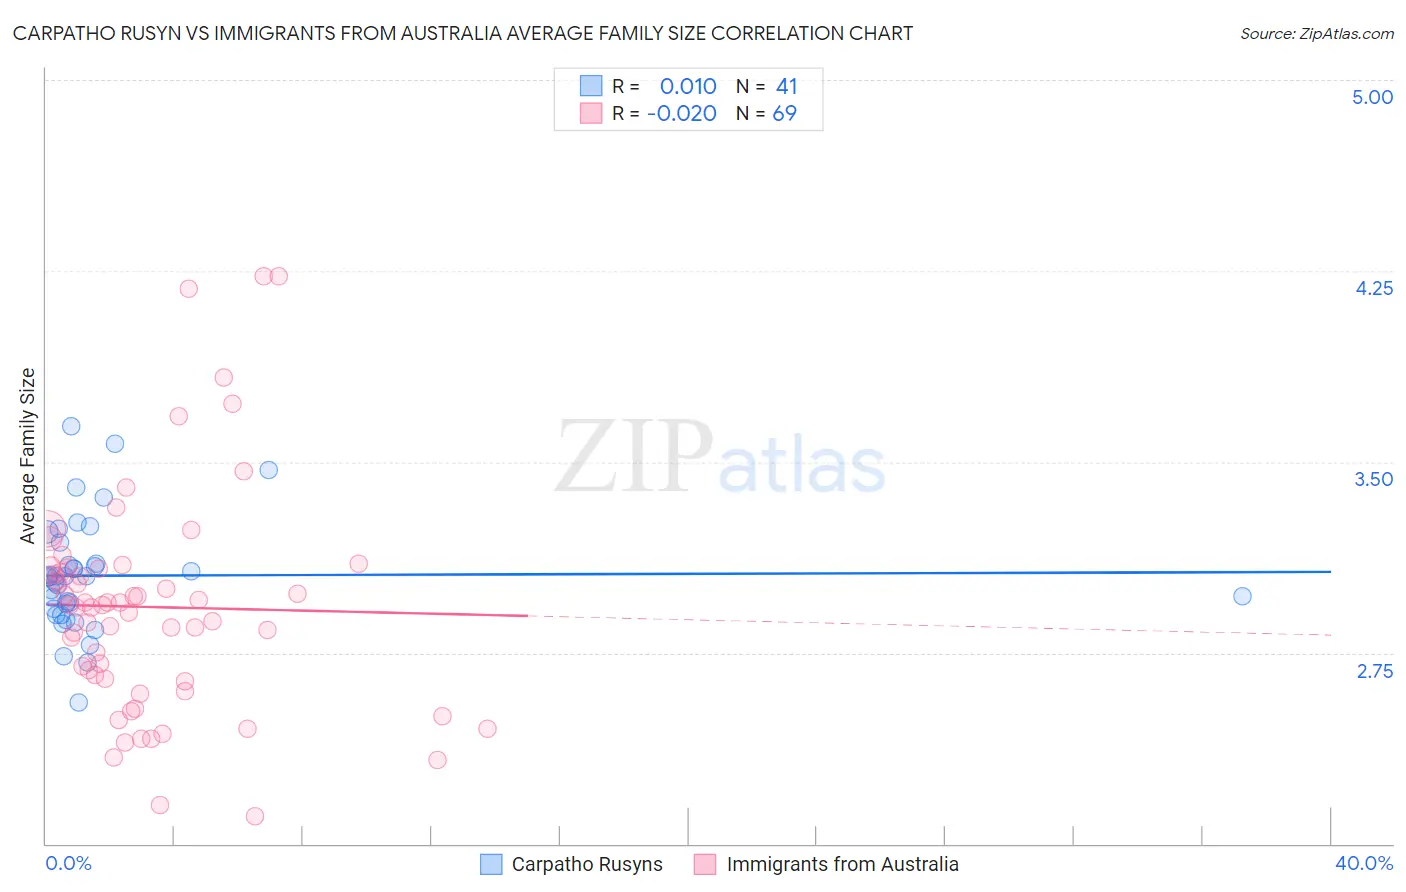 Carpatho Rusyn vs Immigrants from Australia Average Family Size